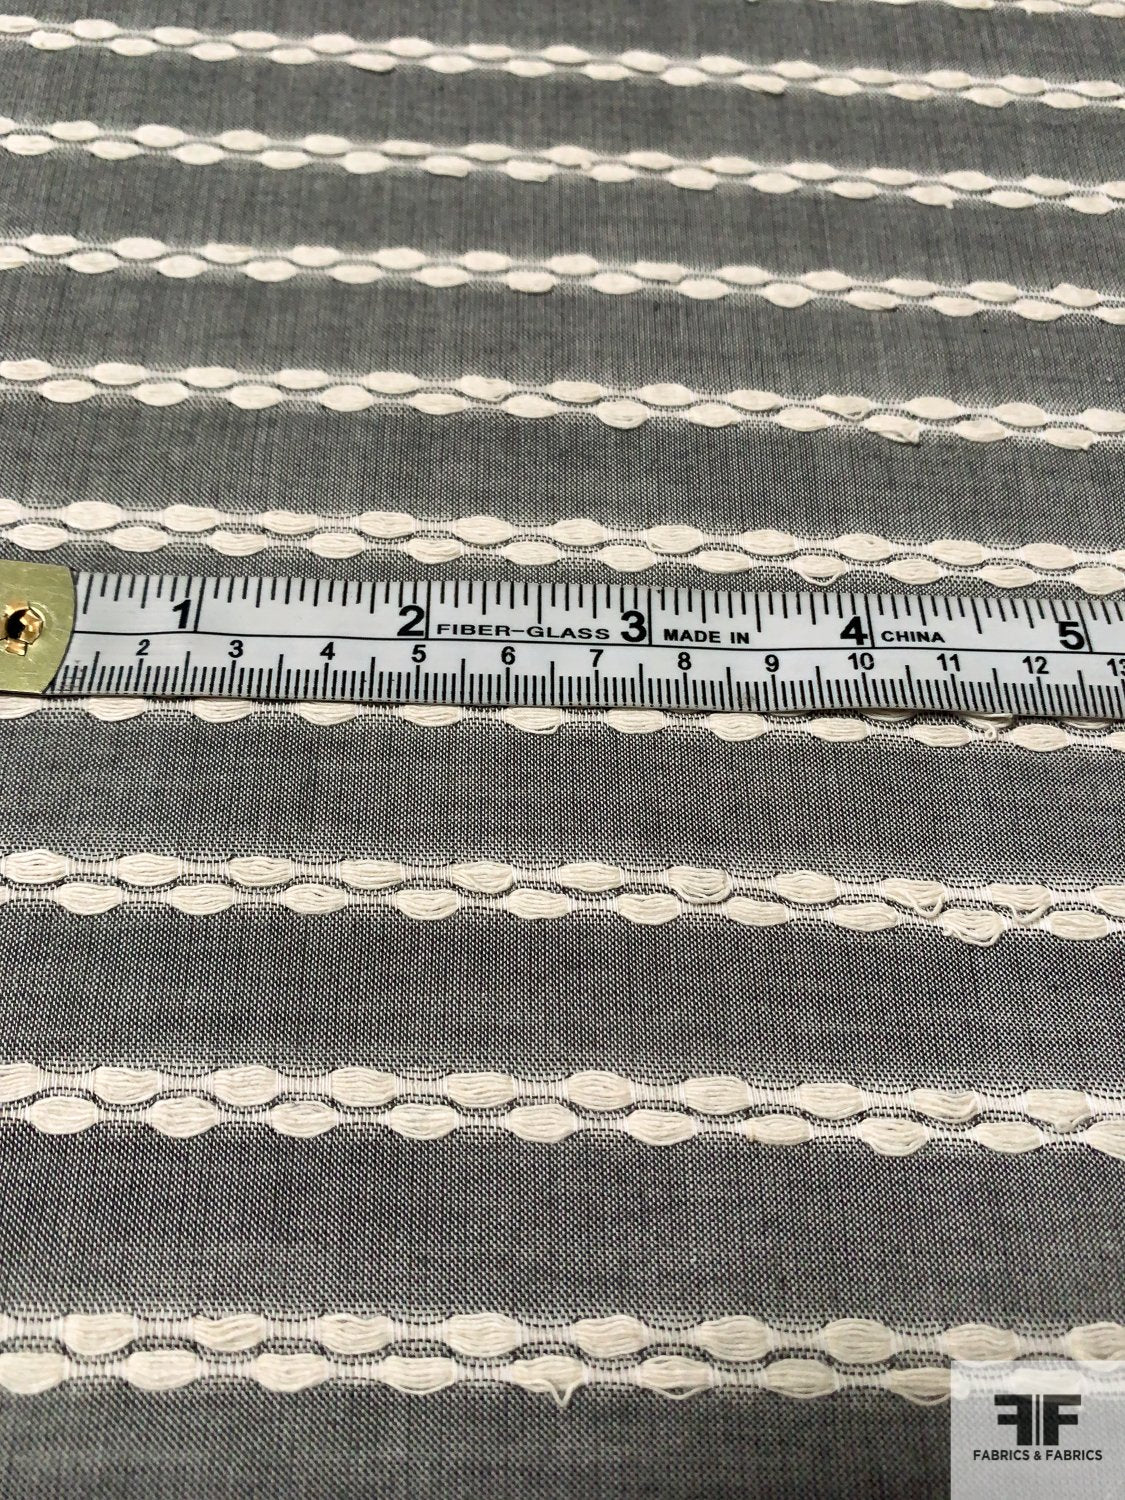 Novelty Cotton Shirting with Horizontal Braid Stripes - Slate Grey / Ivory